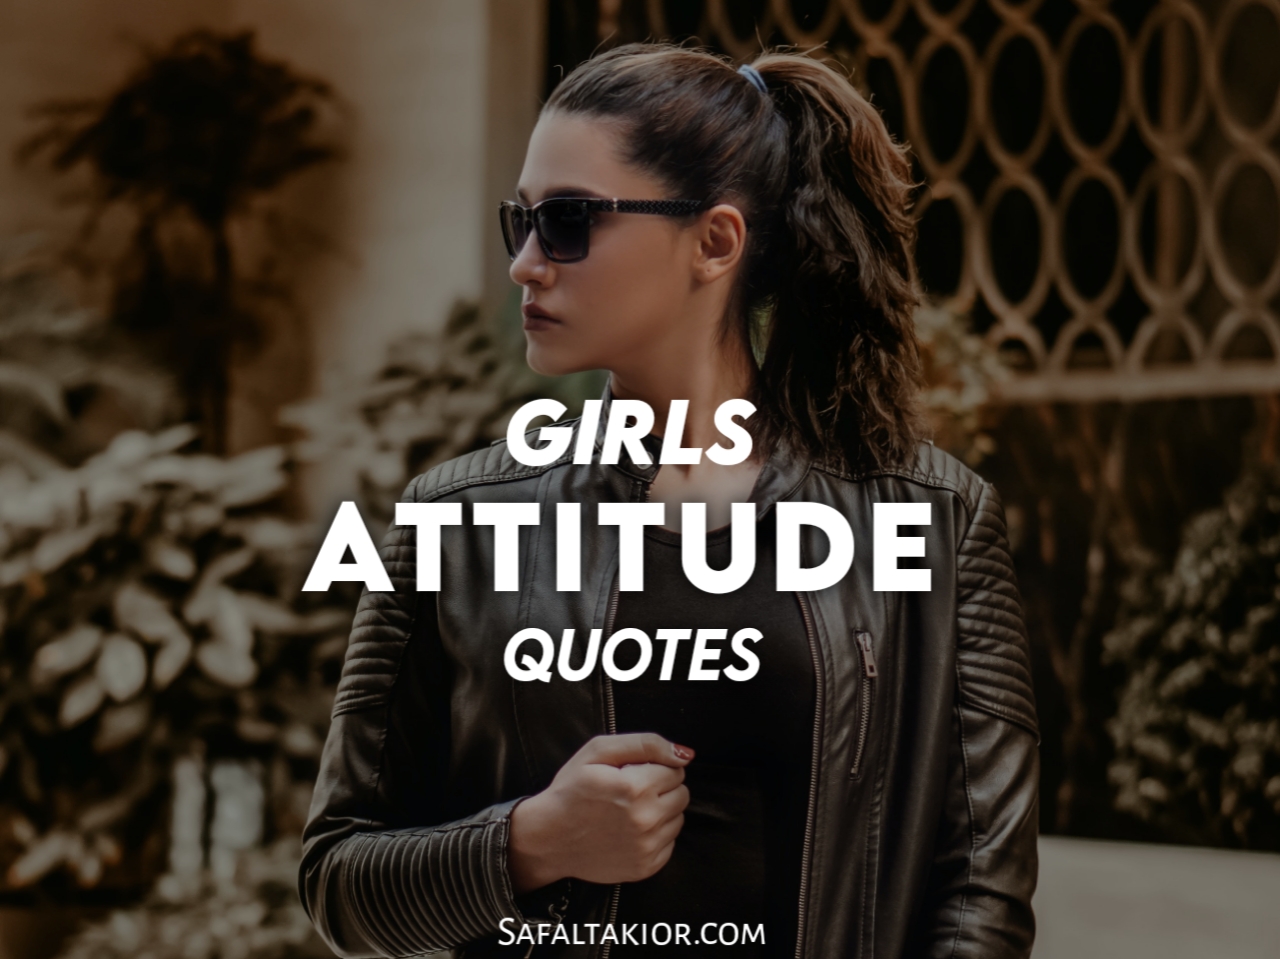 Girls attitude